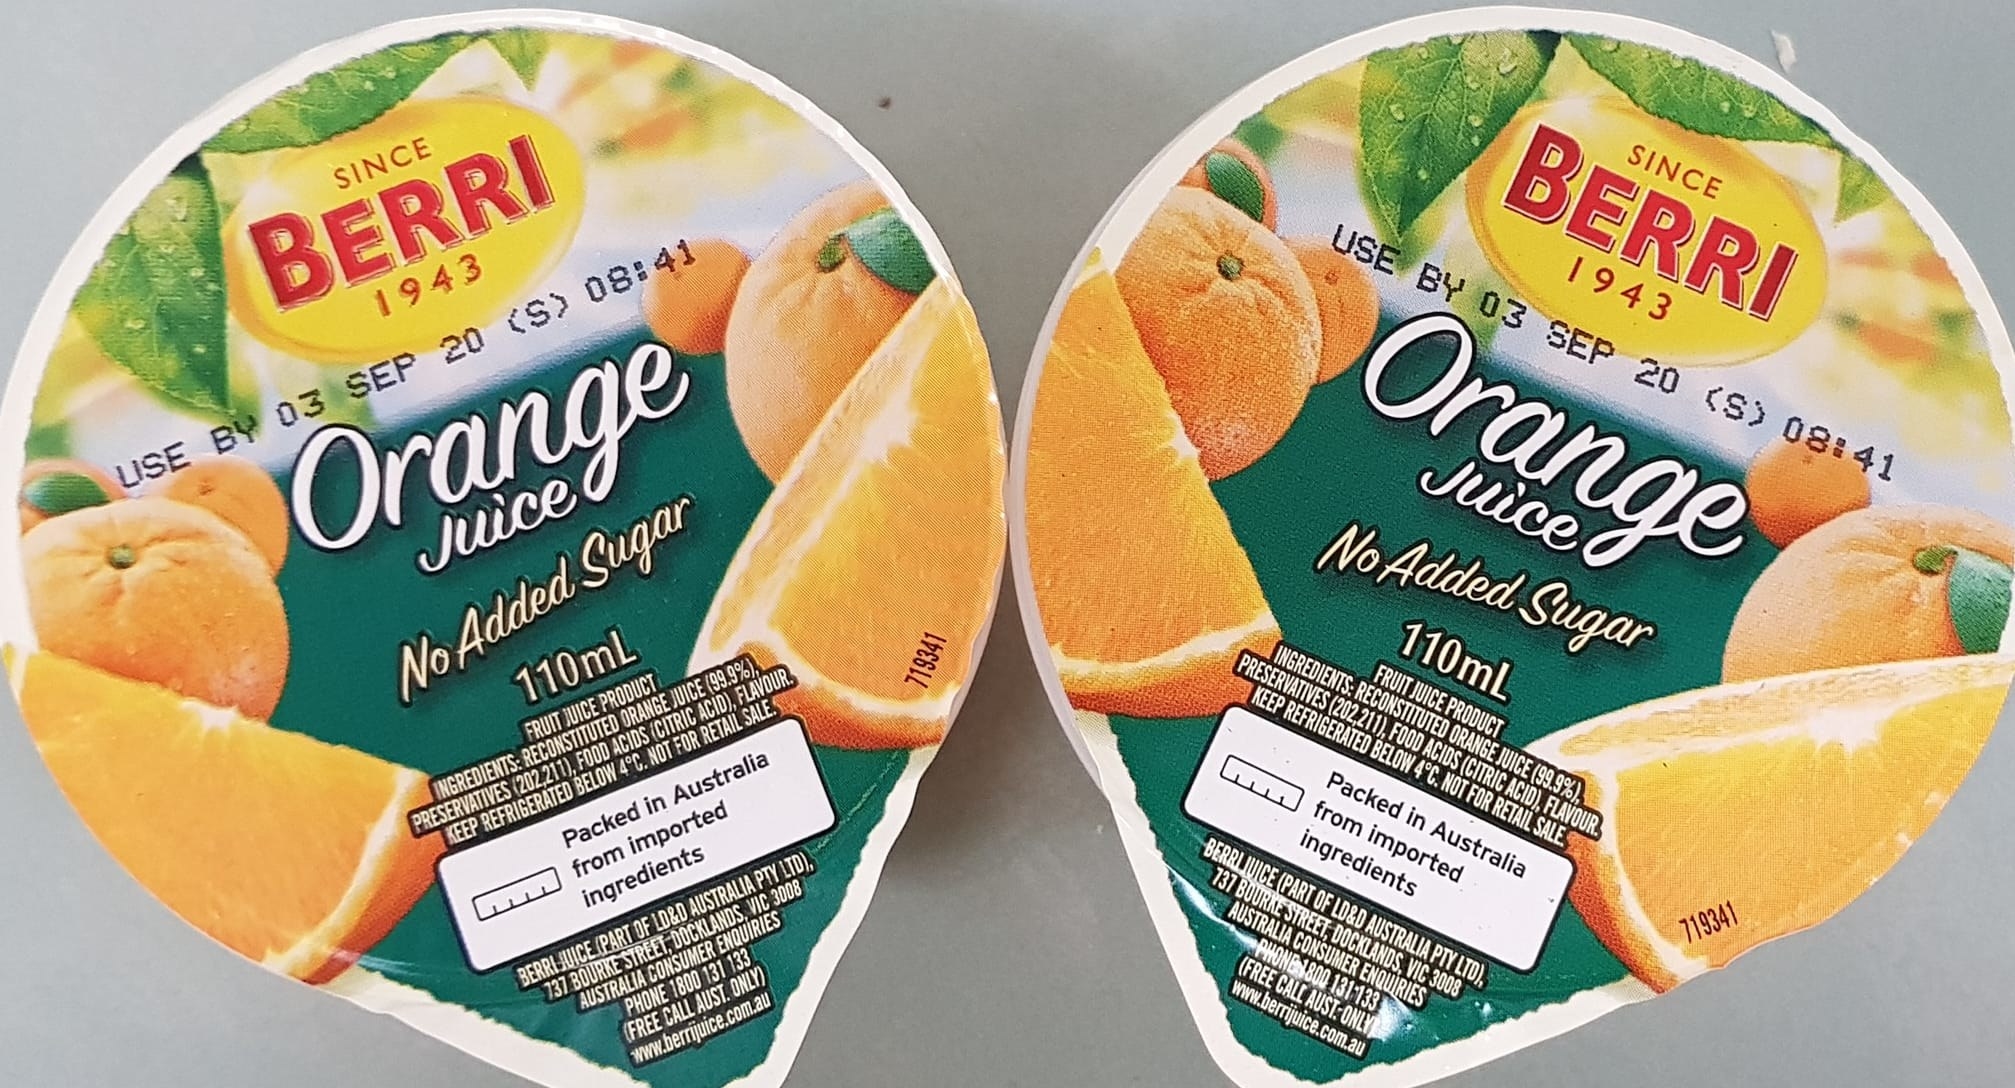 Two Berri brand orange juice cups 